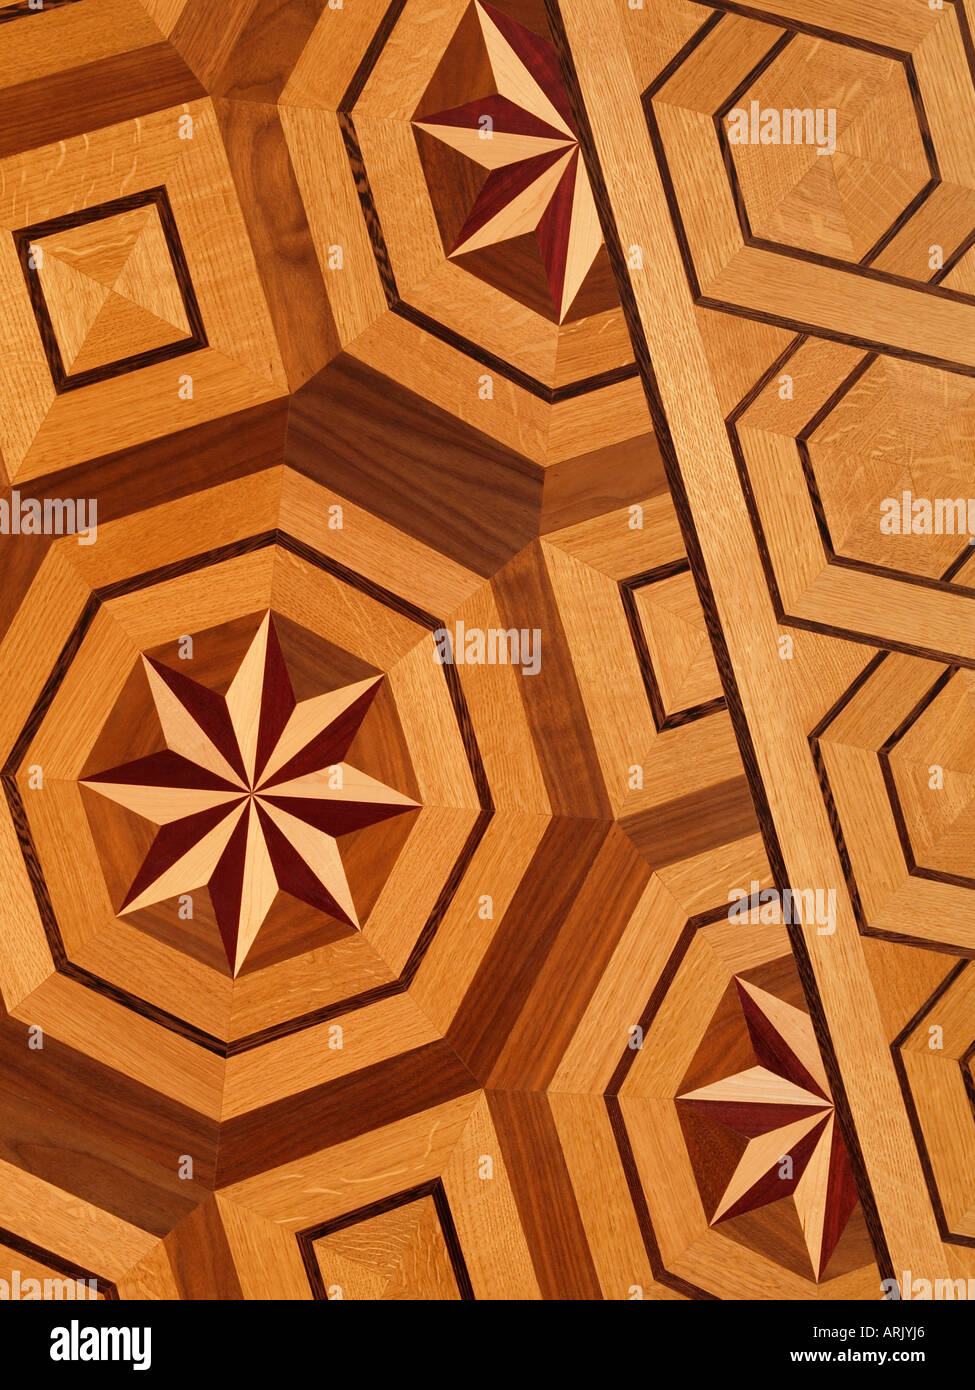 Parquet Hardwood Floor Detail With Very Complex Patterns Stock